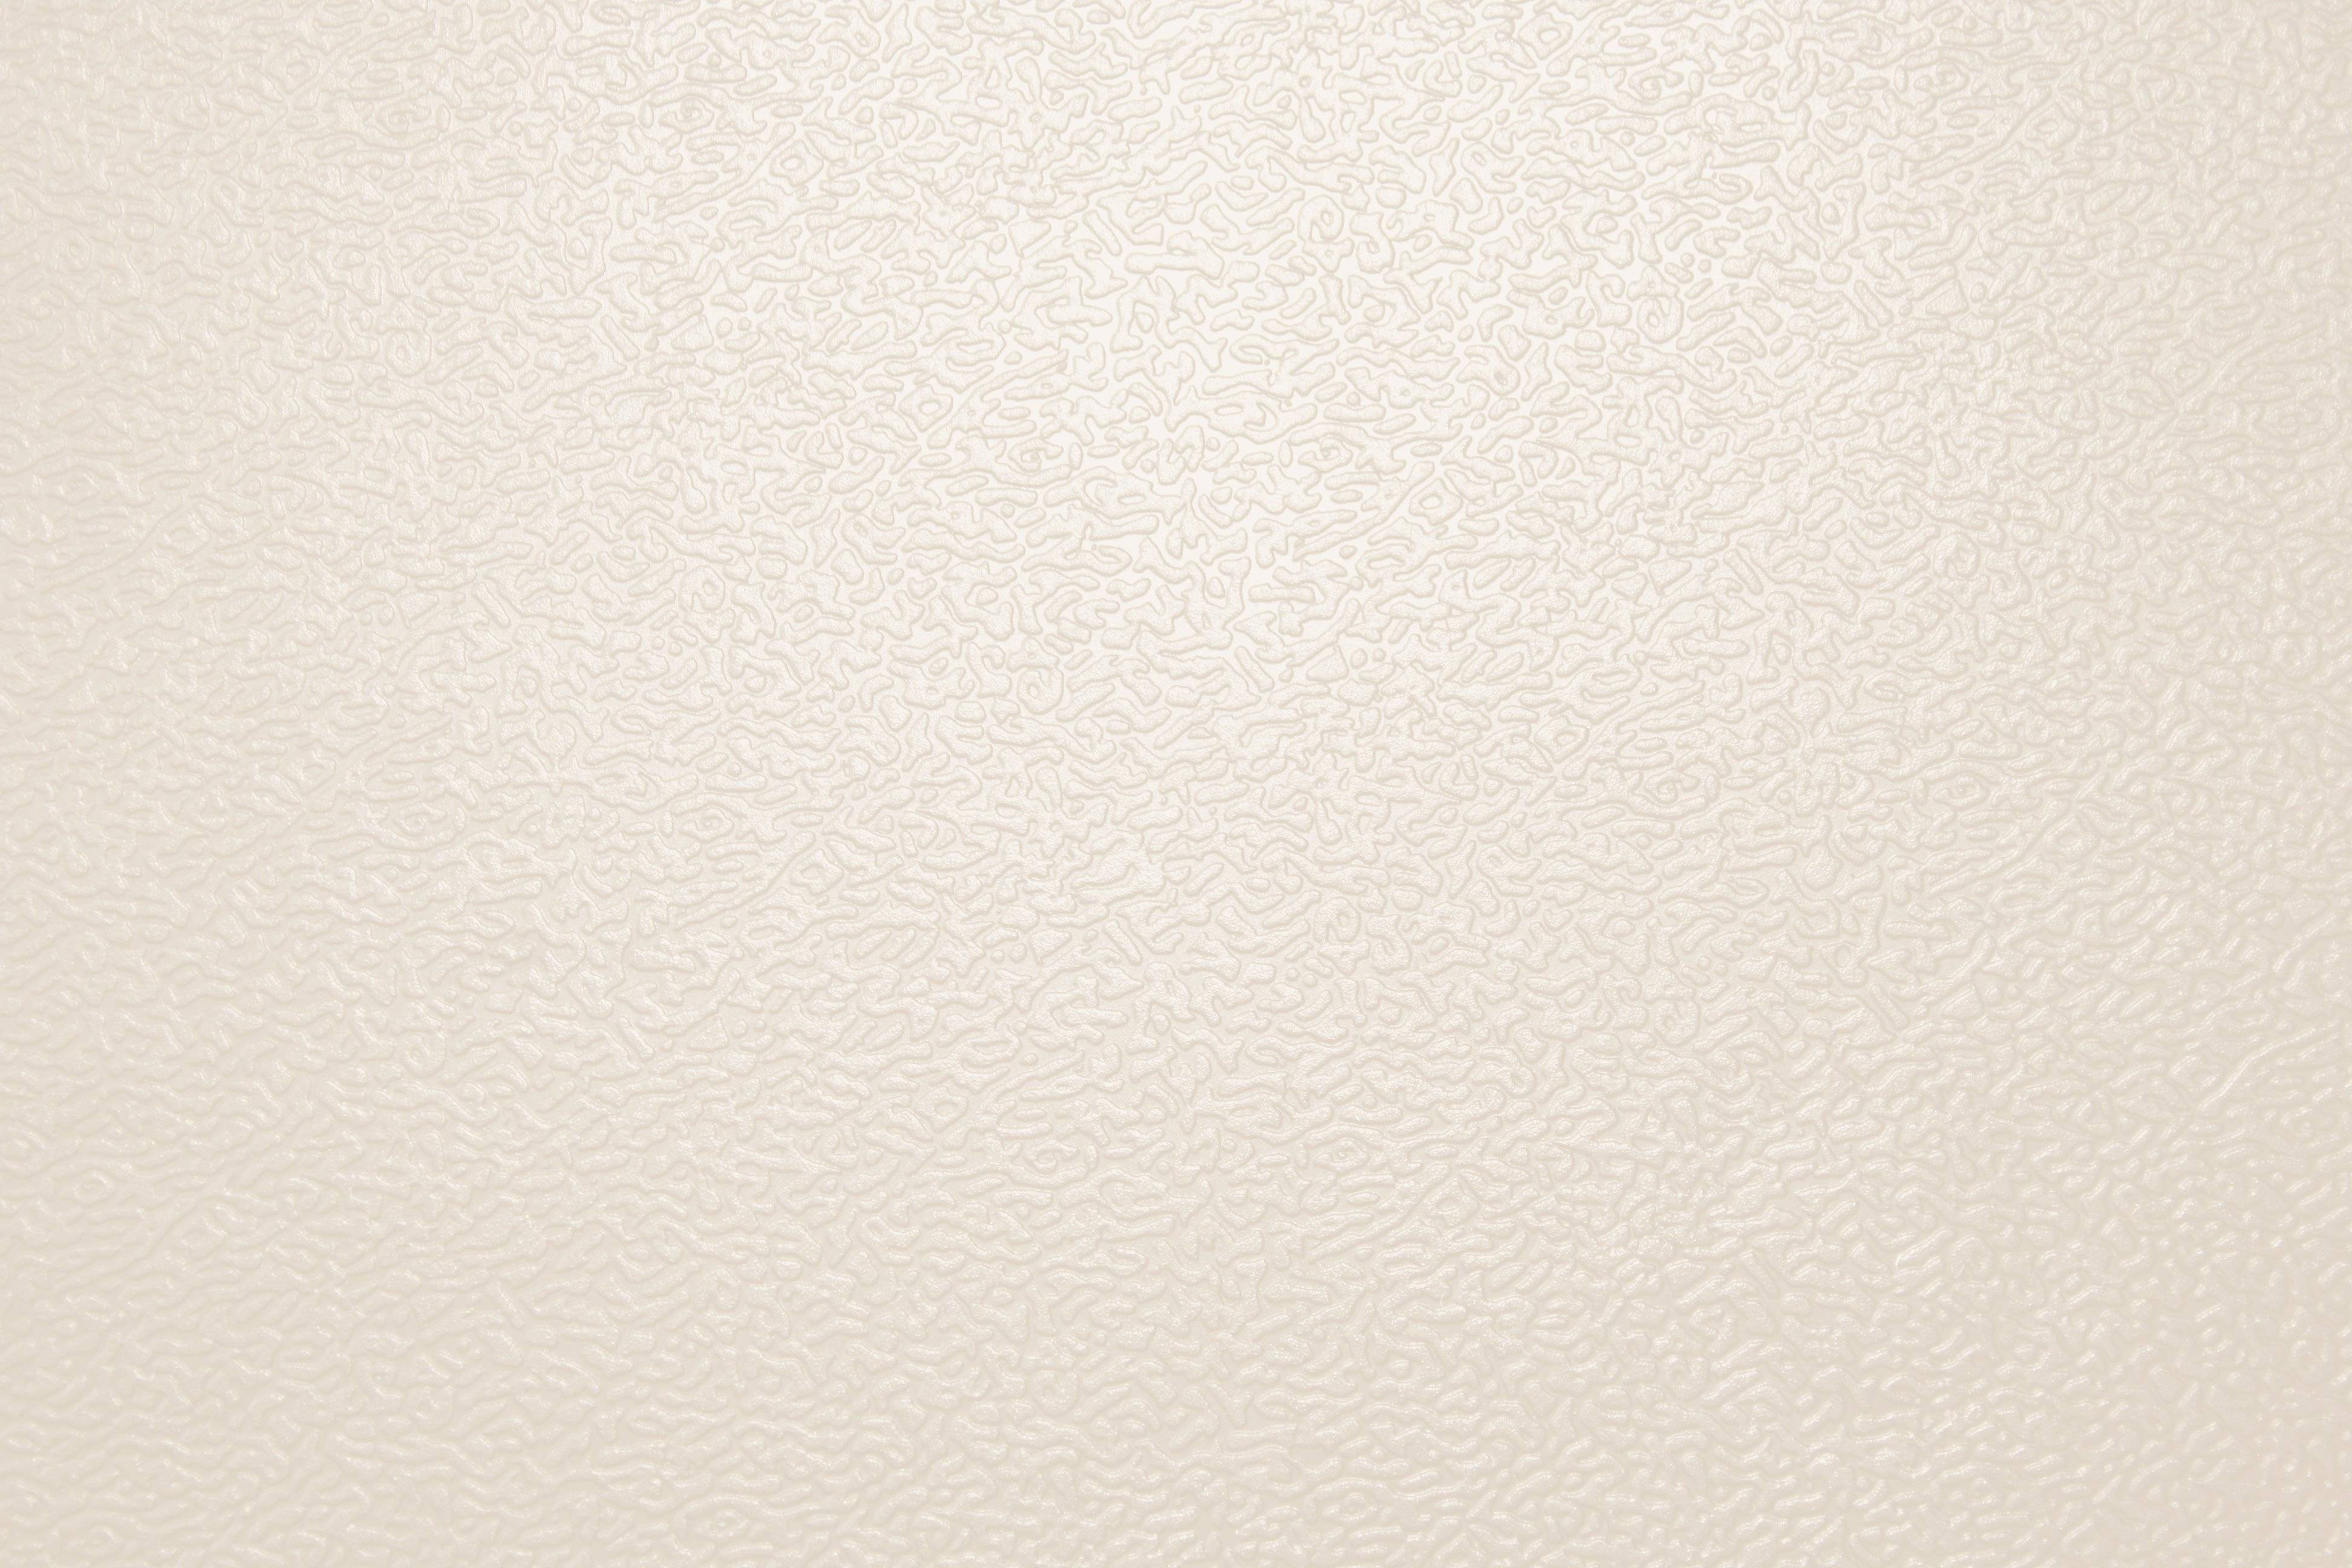 Cream Colored Wallpaper 153170 High Definition Wallpaper. Suwall